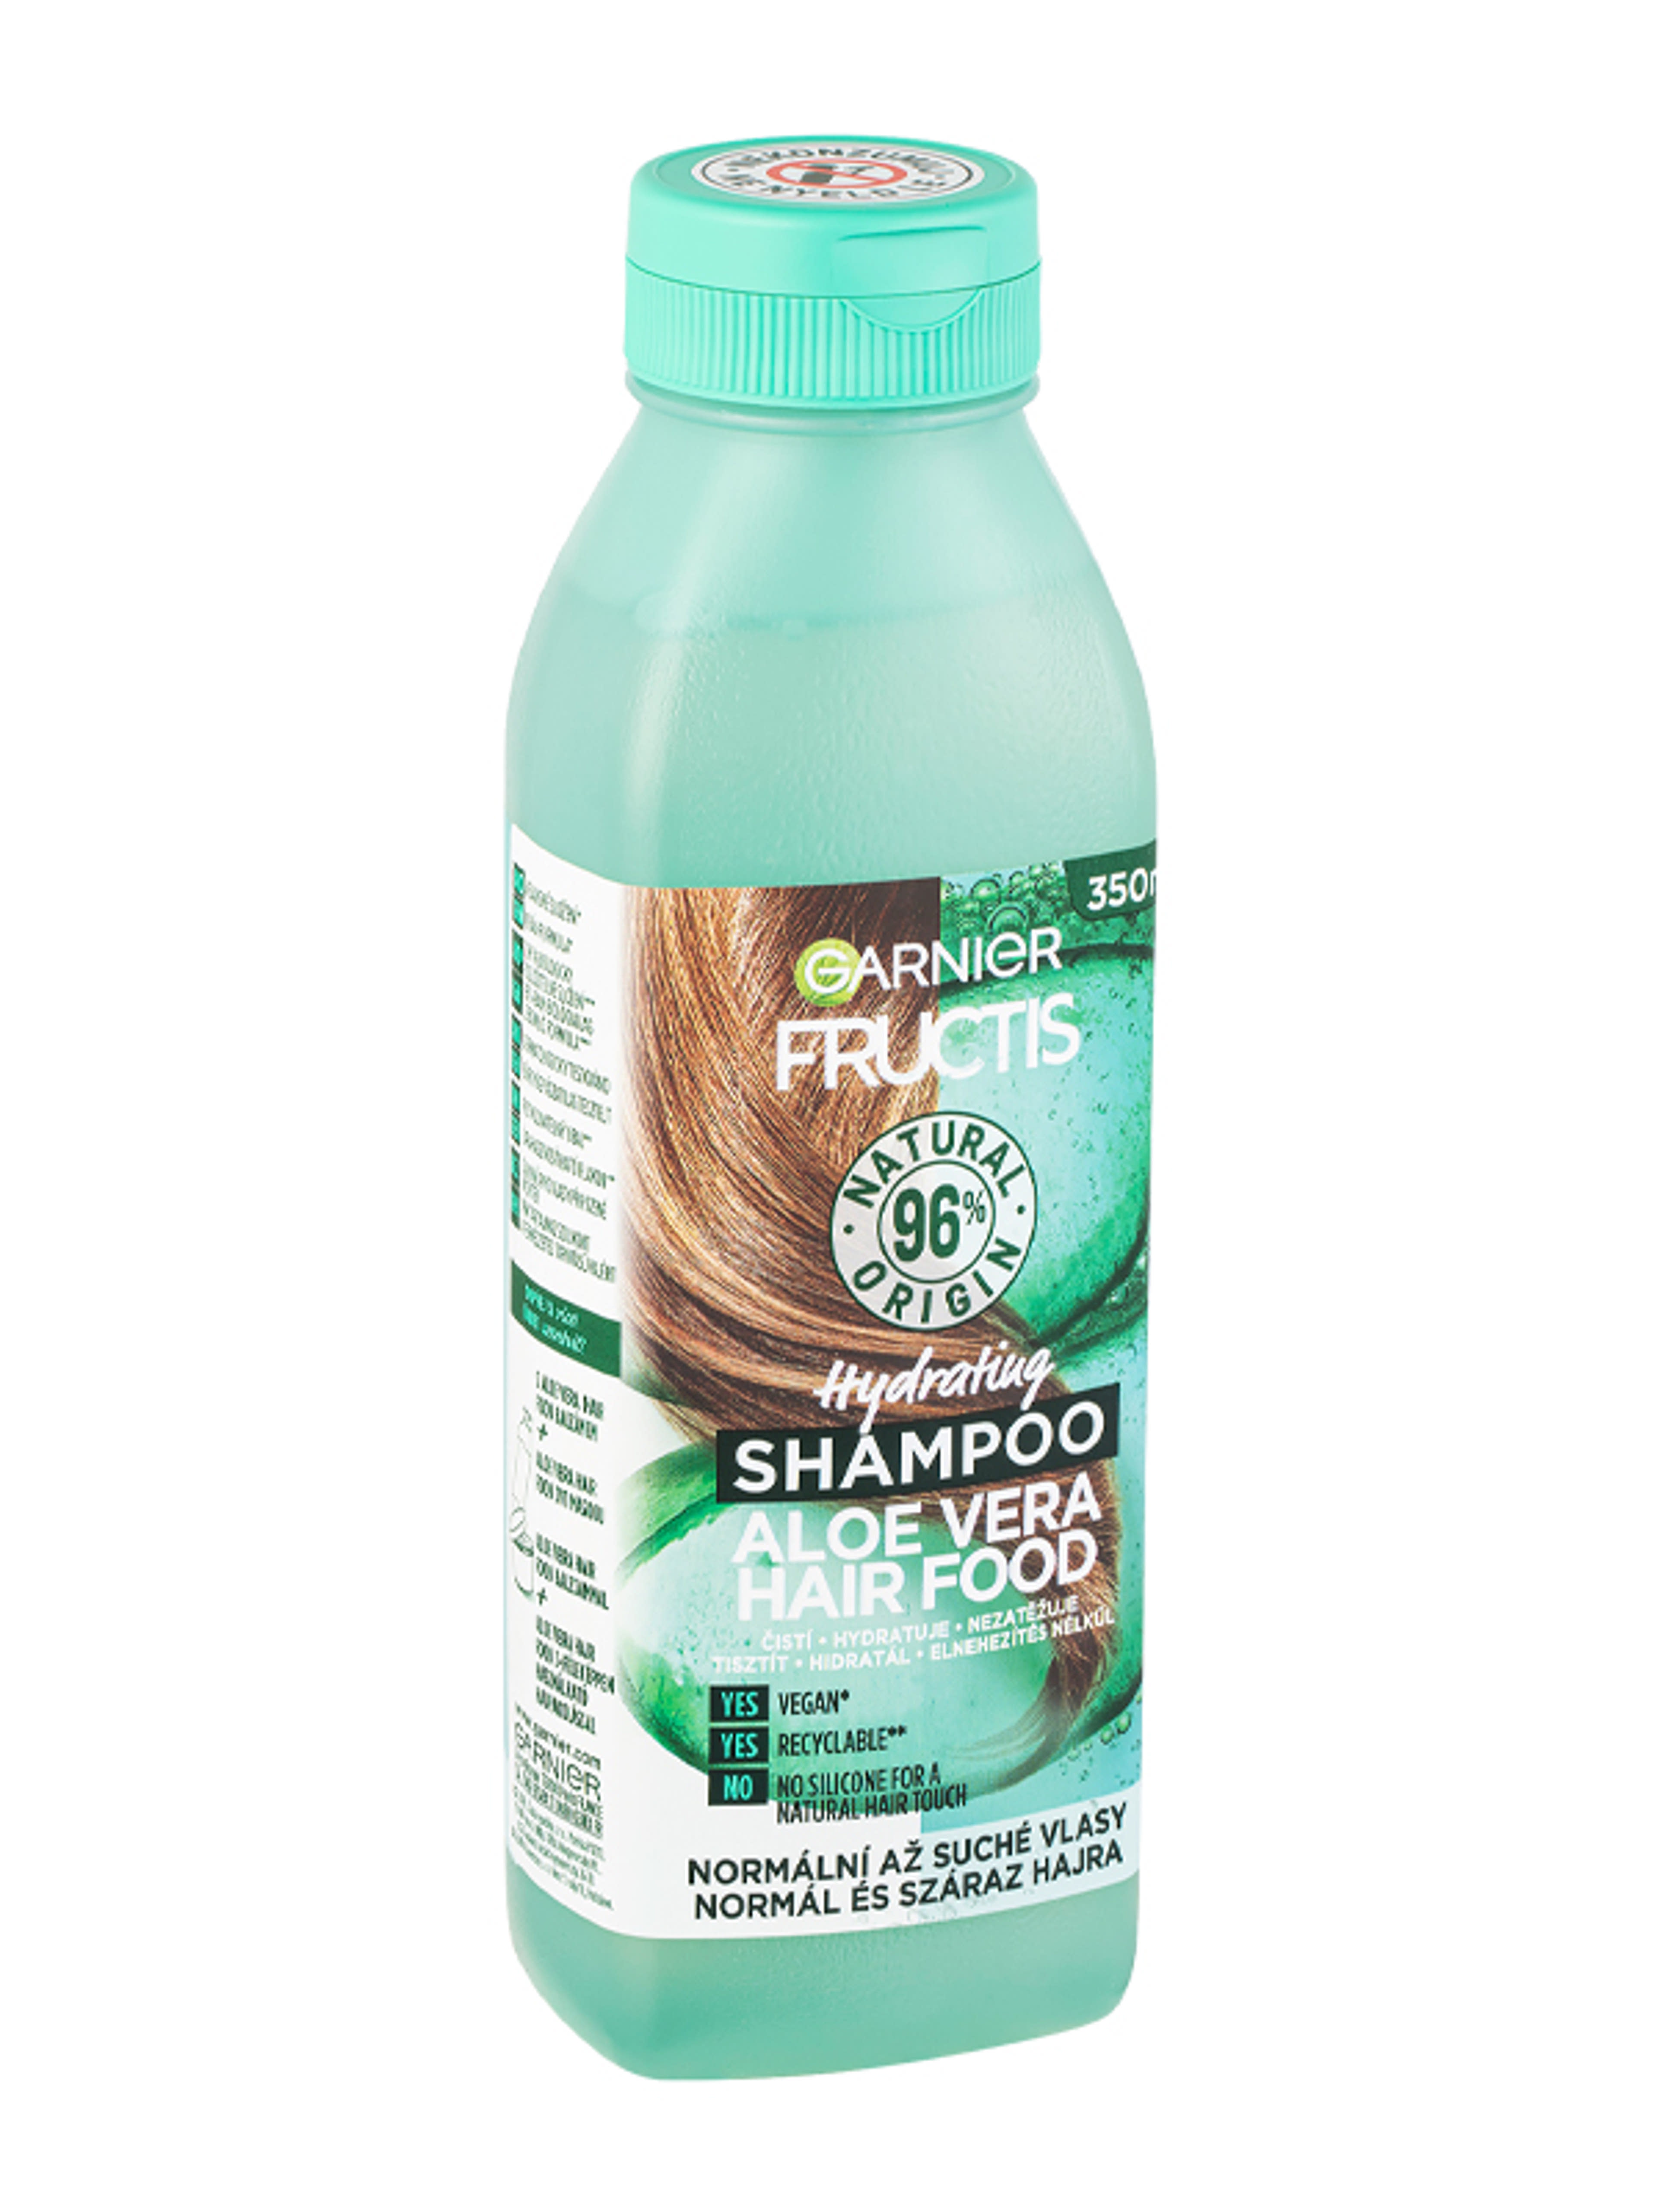 Garnier Fructis Hair Food Aloe Vera hidratáló sampon - 350 ml-2